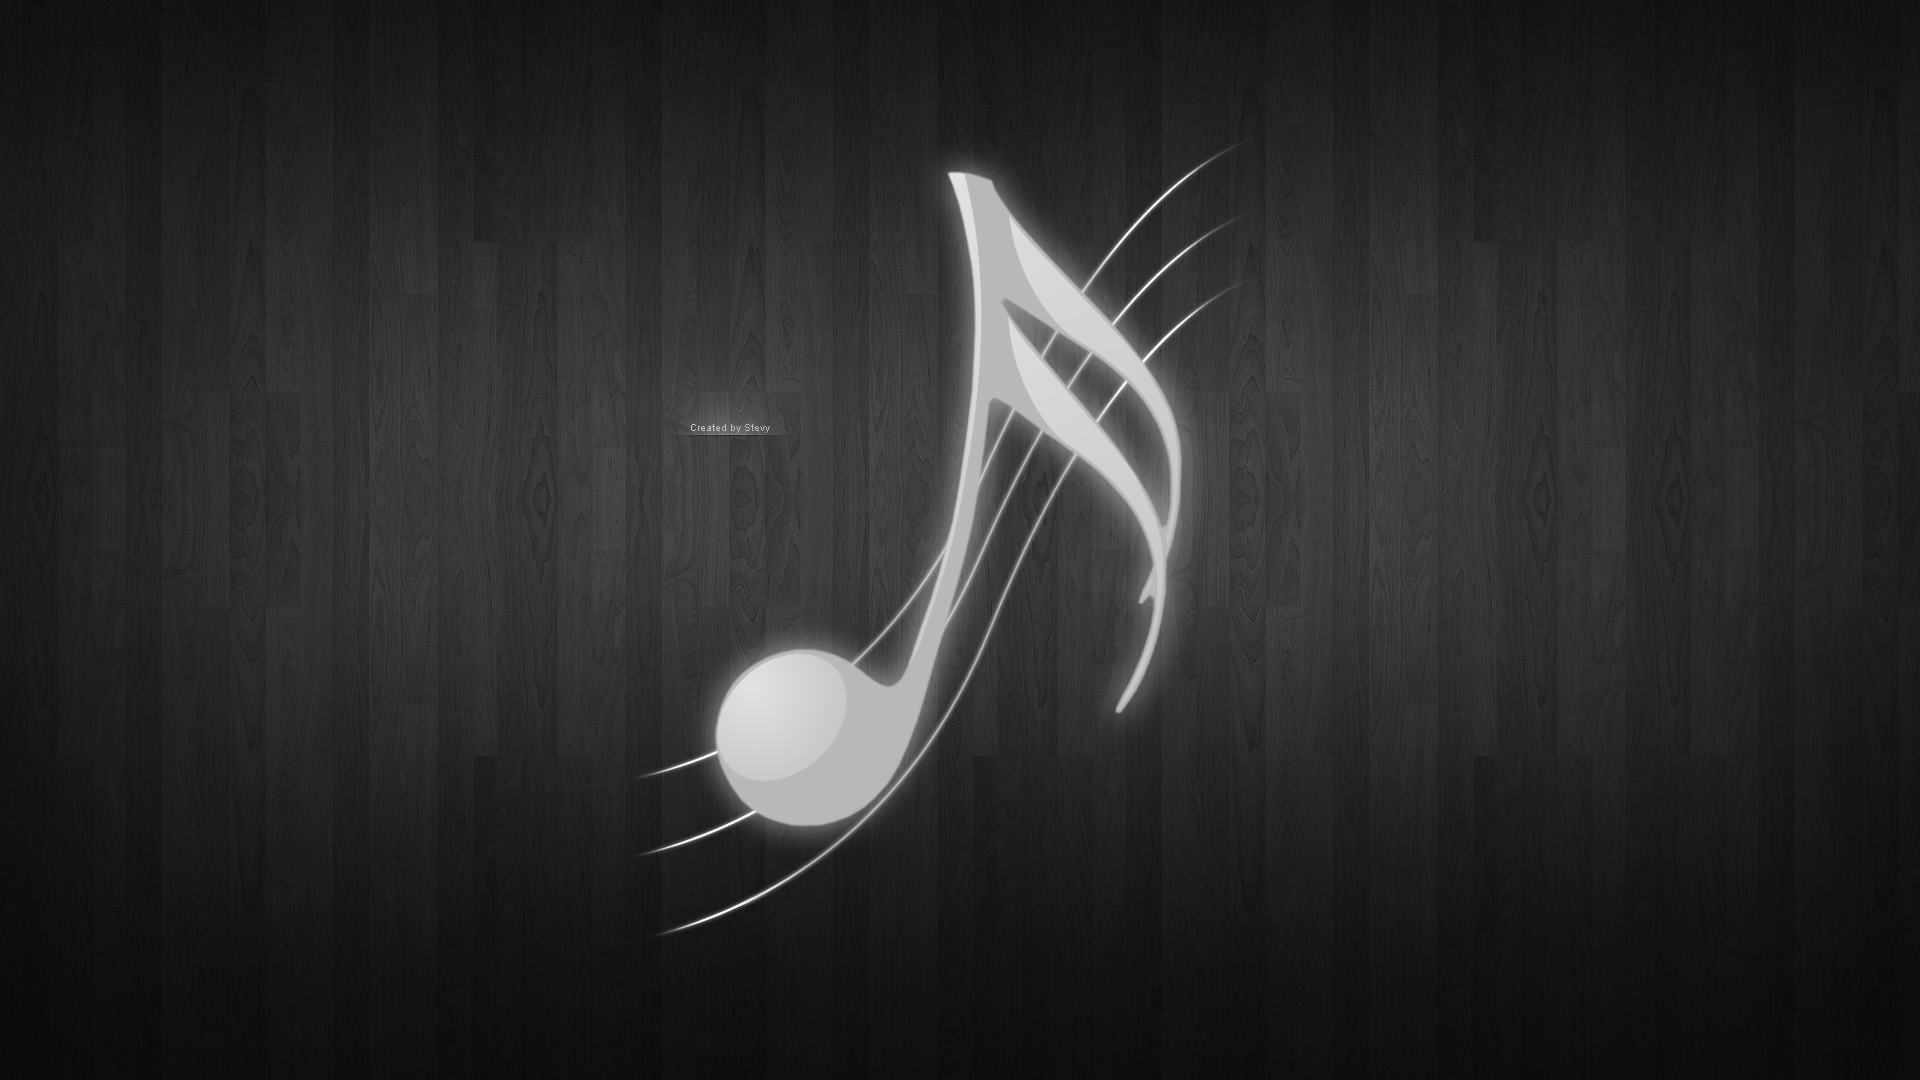 Musical Wallpaper Desktop with HD Wallpaper - Kemecer.com